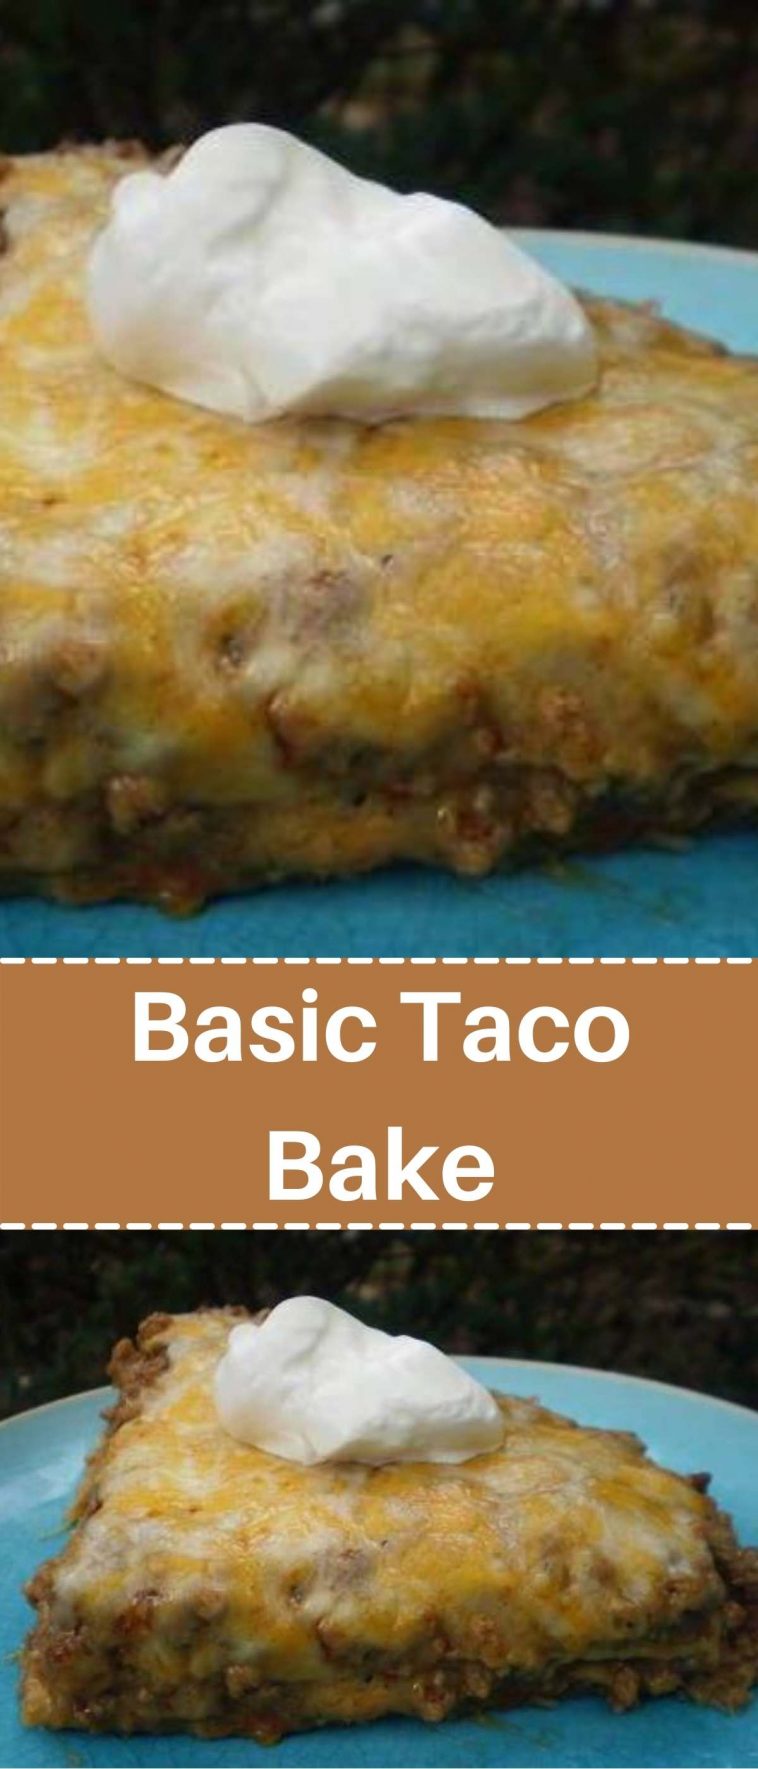 Basic Taco Bake